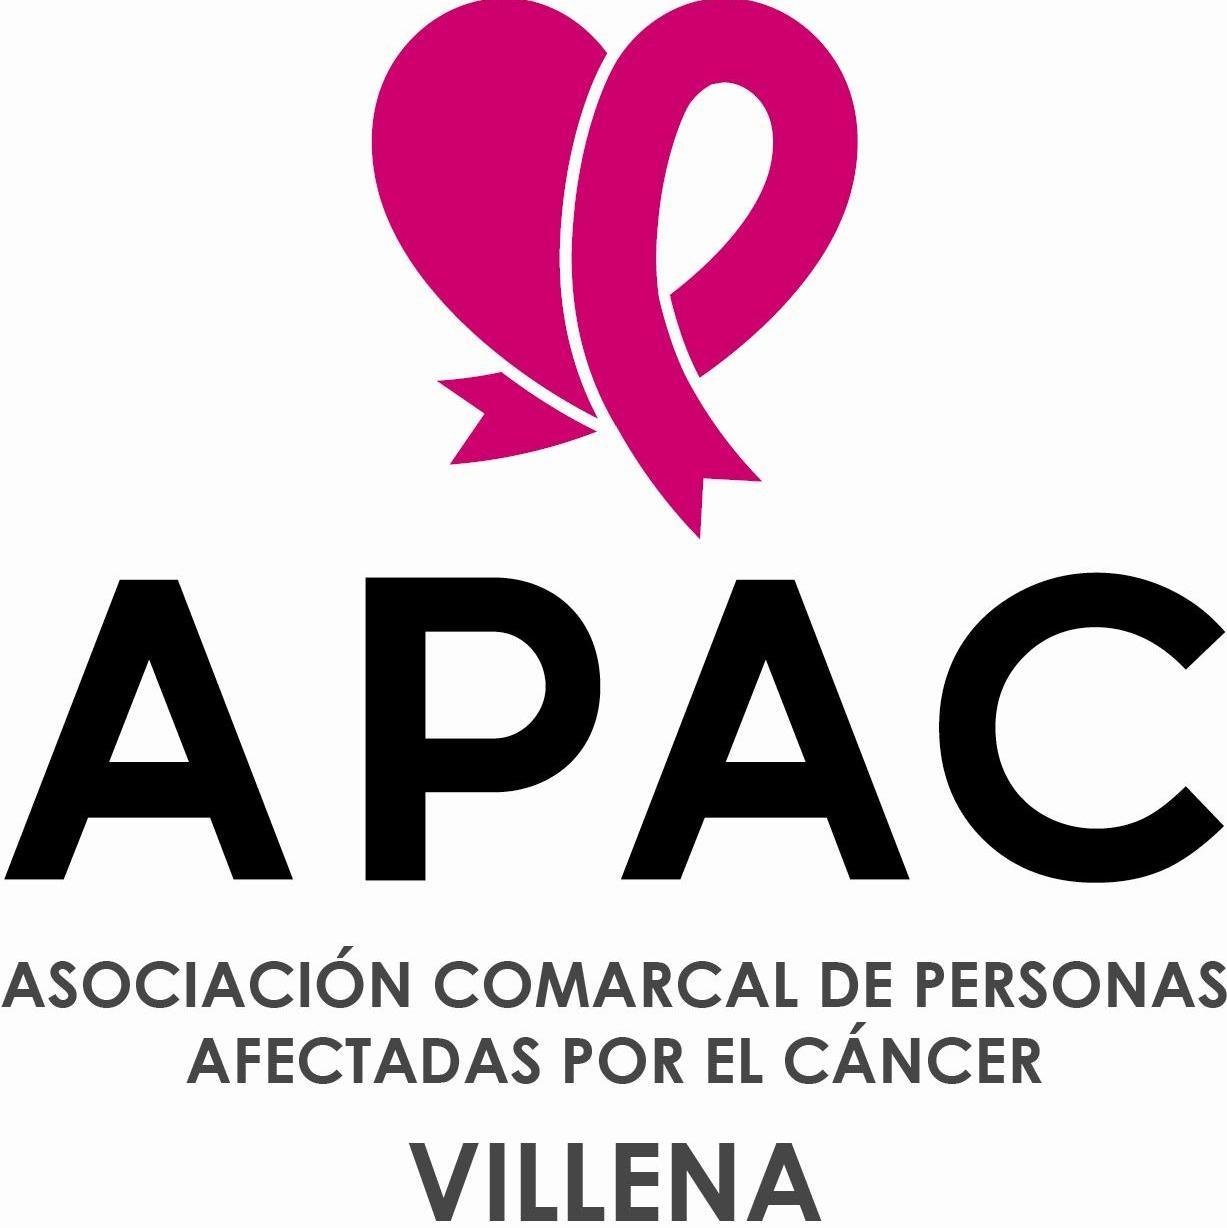 APAC (ASOCIACIÓN COMARCAL DE PERSONAS AFECTADOS POR EL CANCER